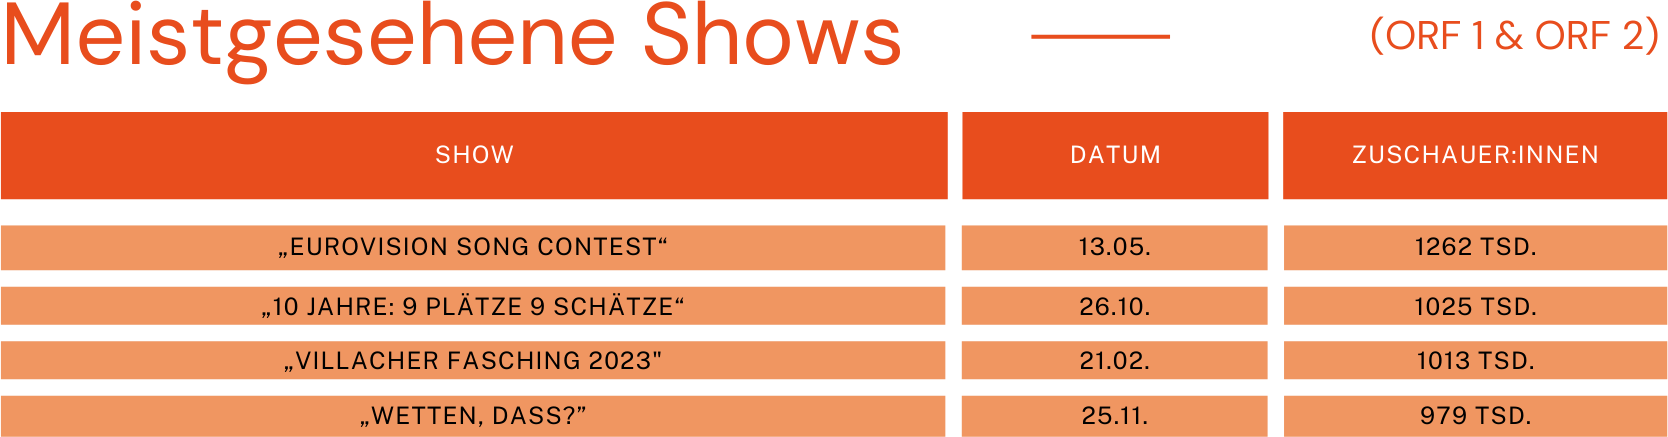 Meistegesehene Shows - Daten Tabelle